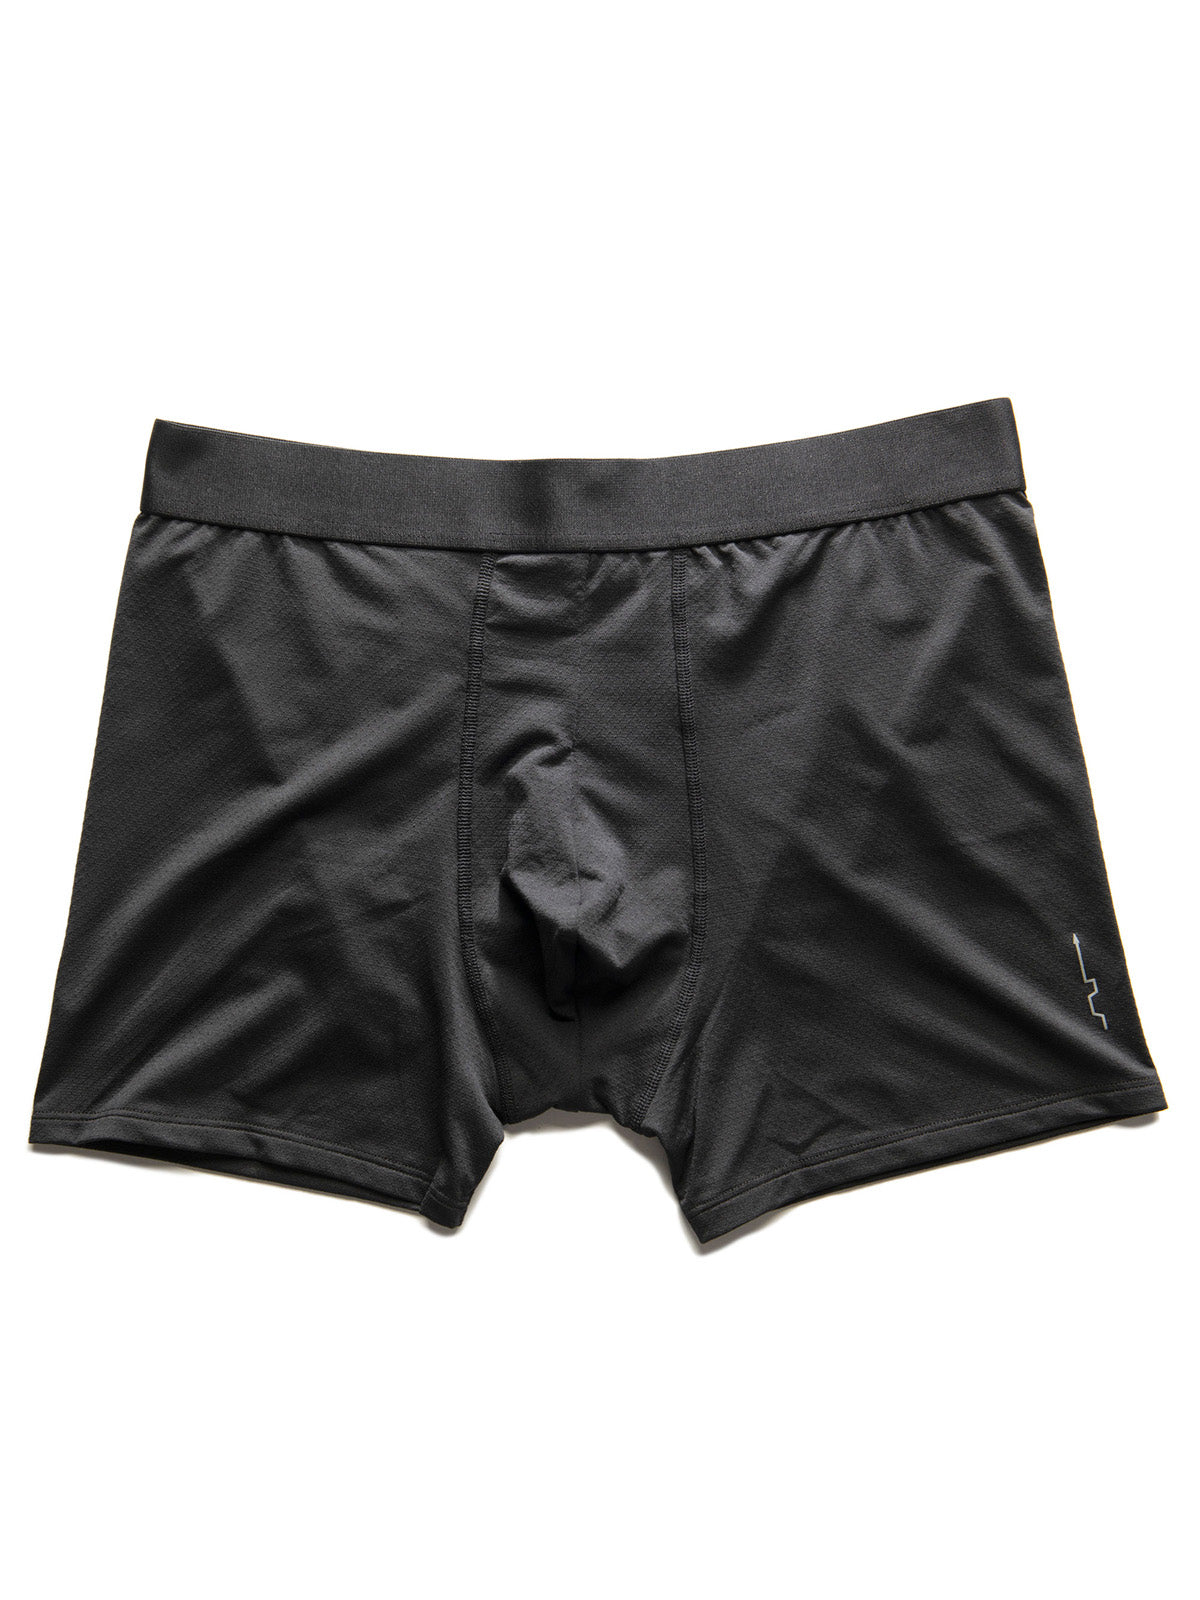 Tahoe CL Base Liner in Black, Best Mens Running Underwear